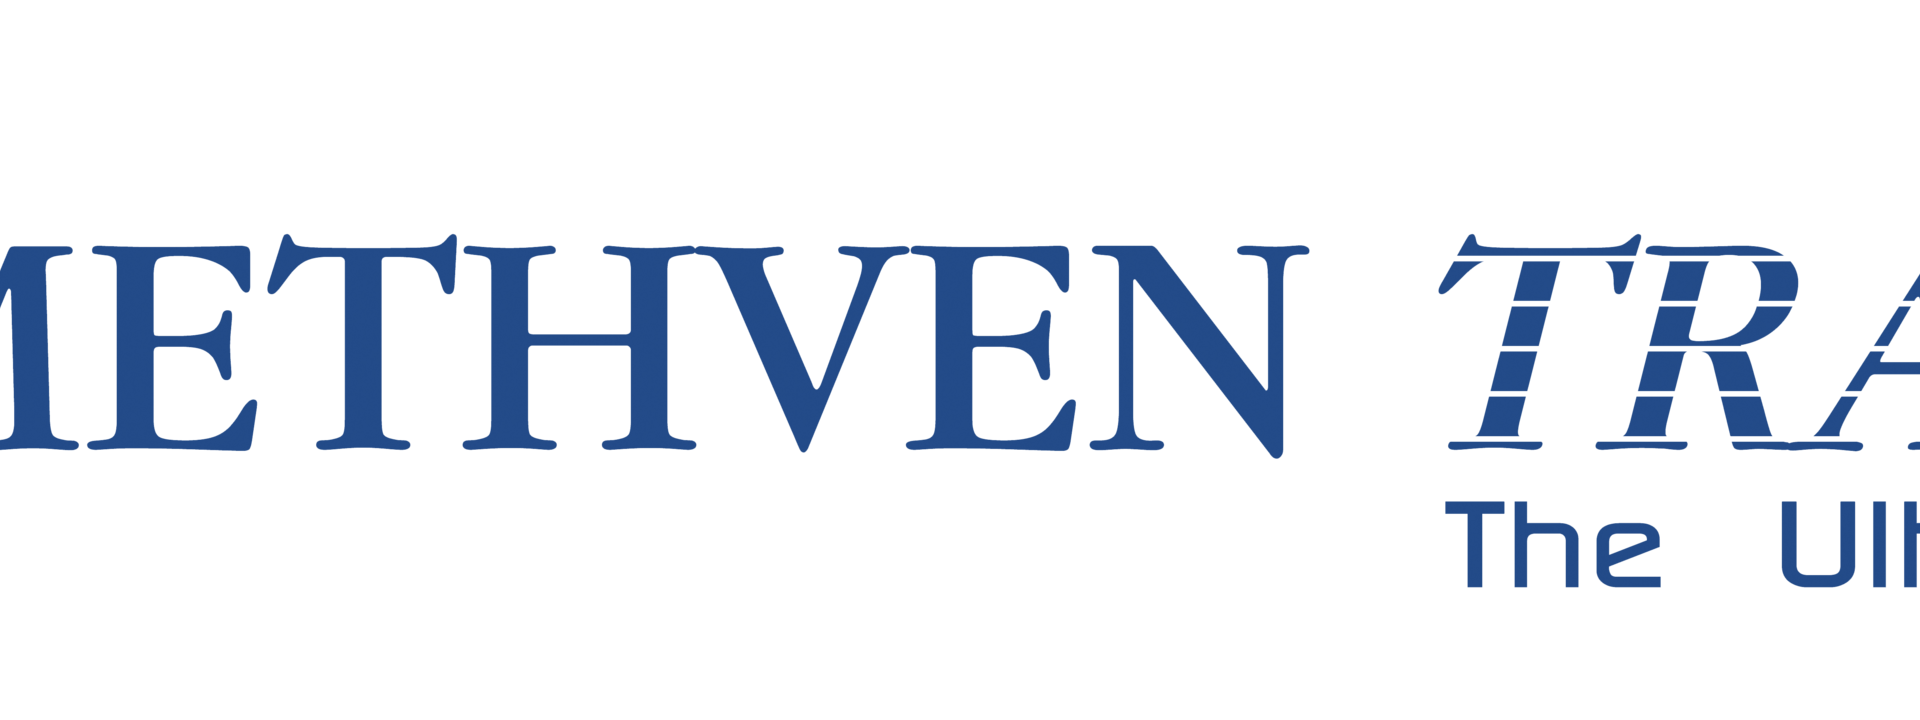 methven-travel-logo-clean.png